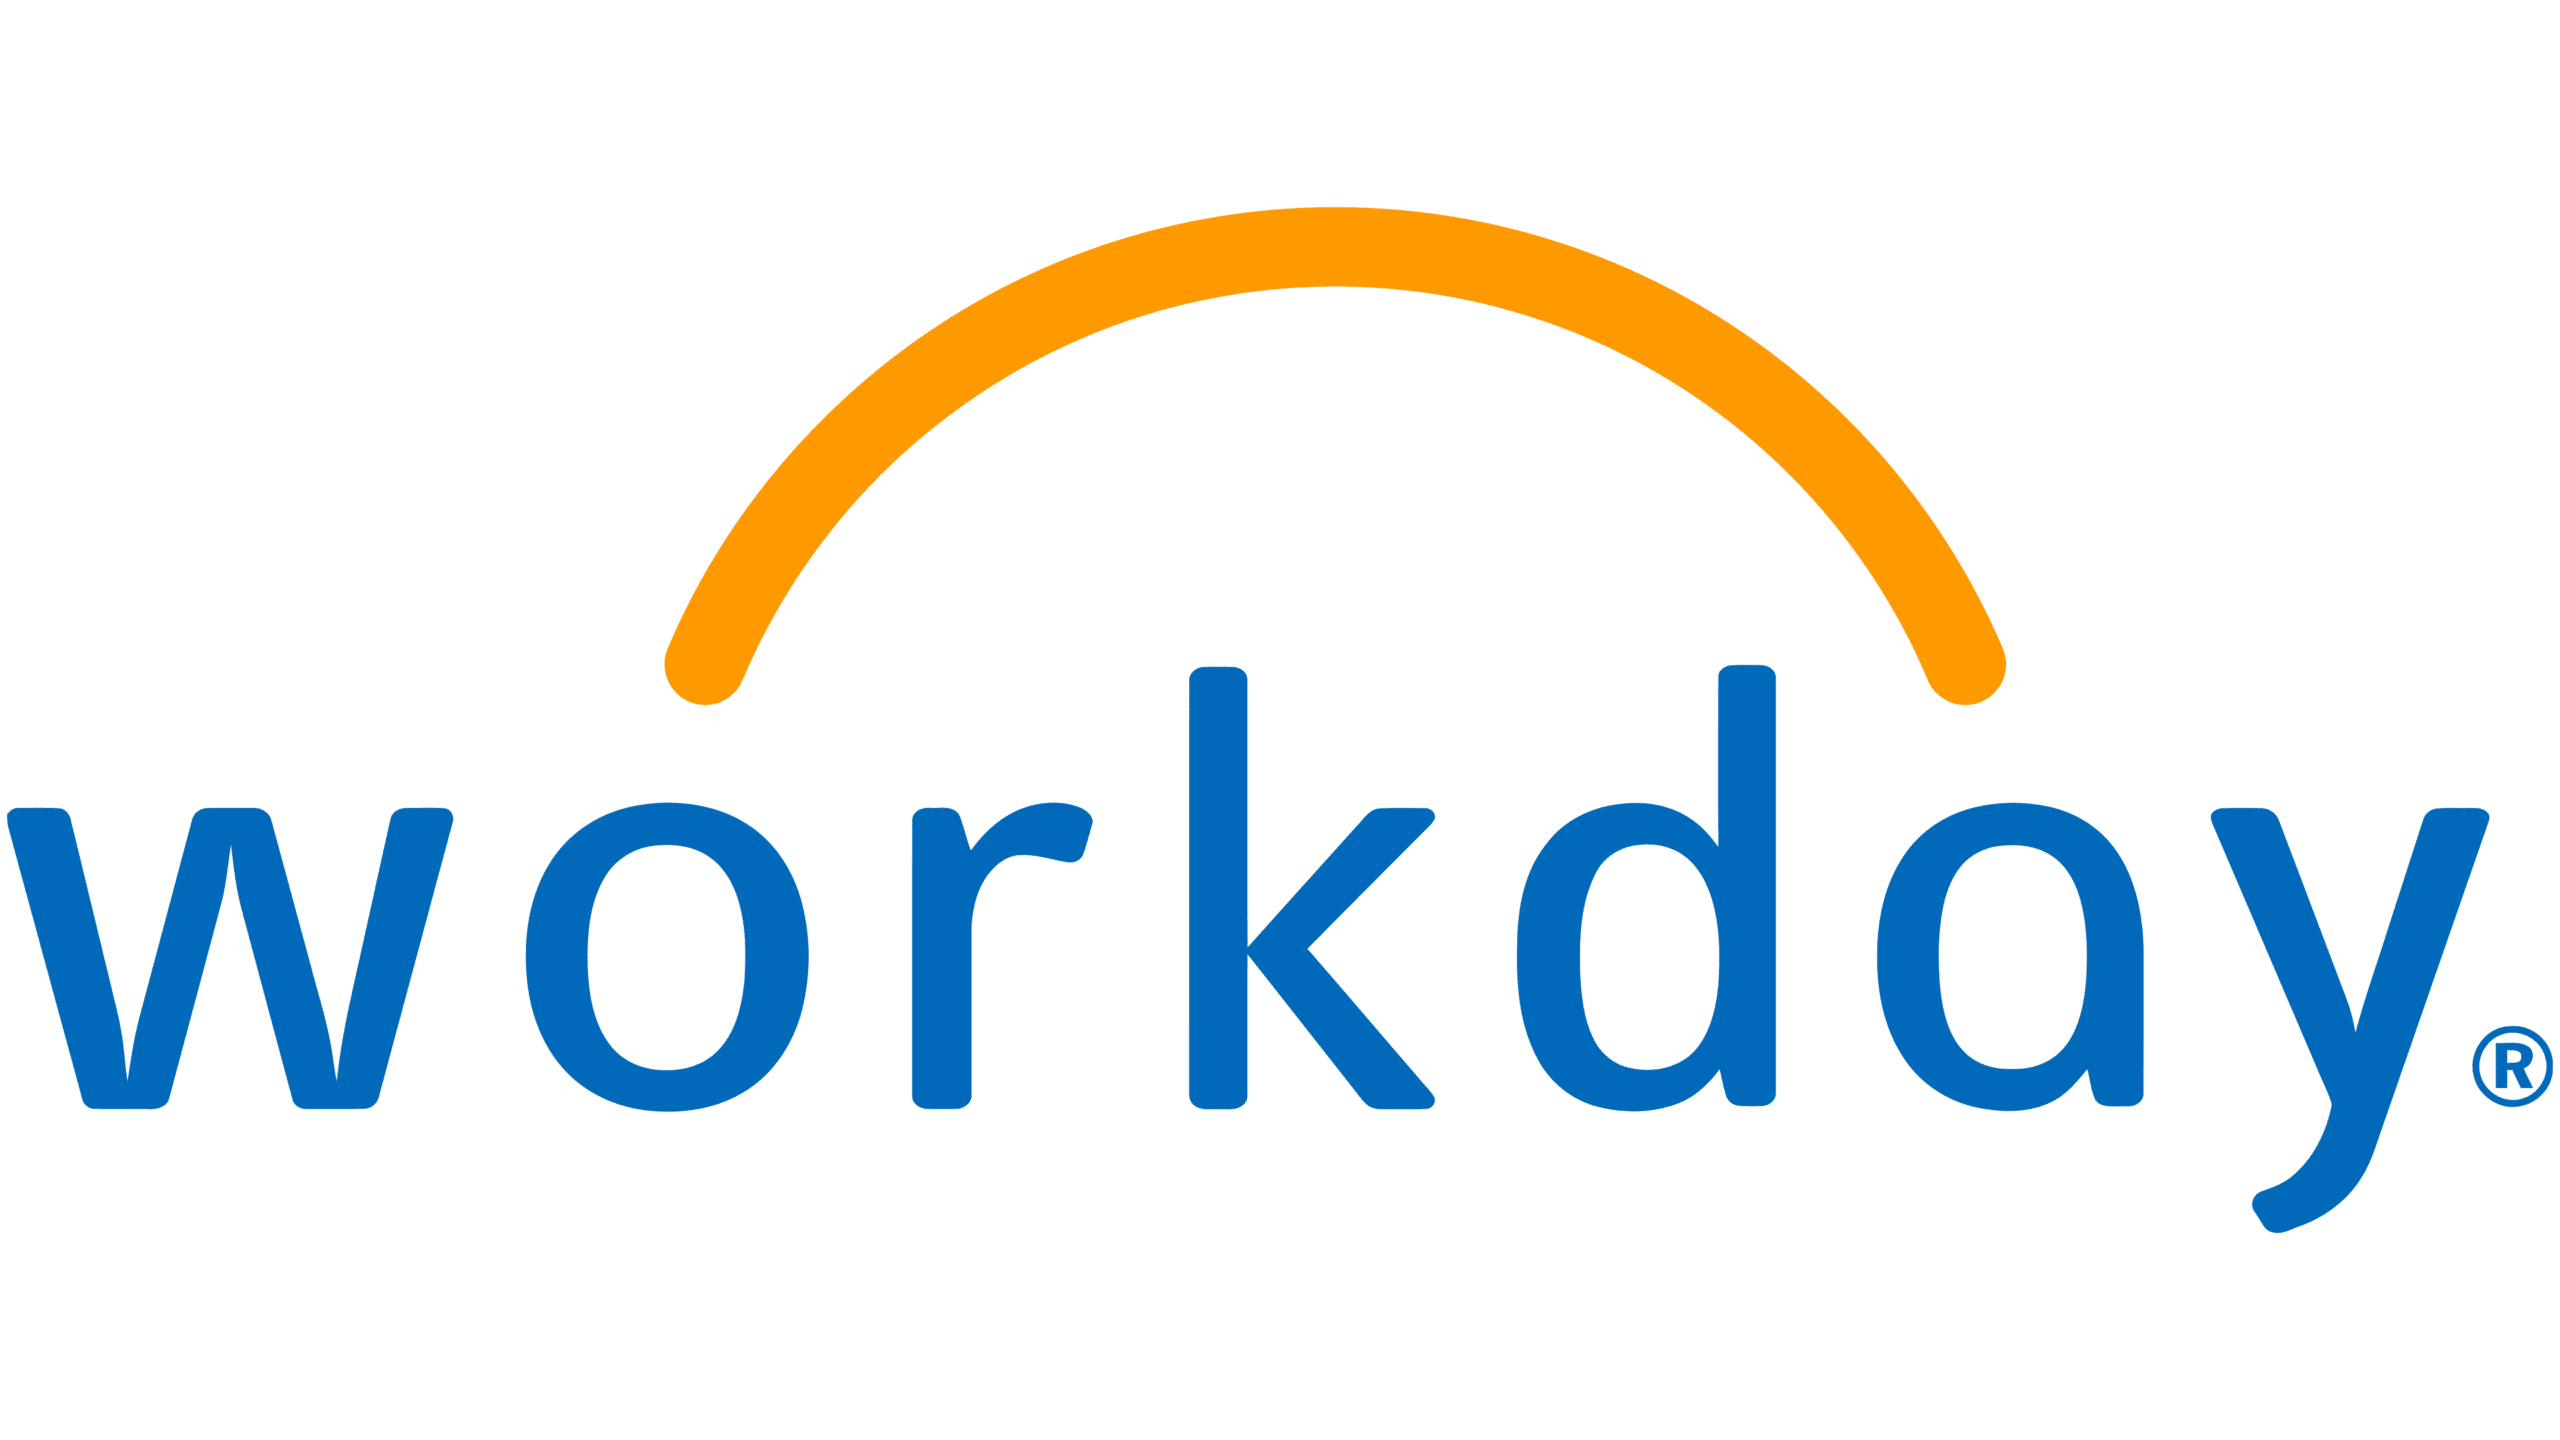 Workday-Logo